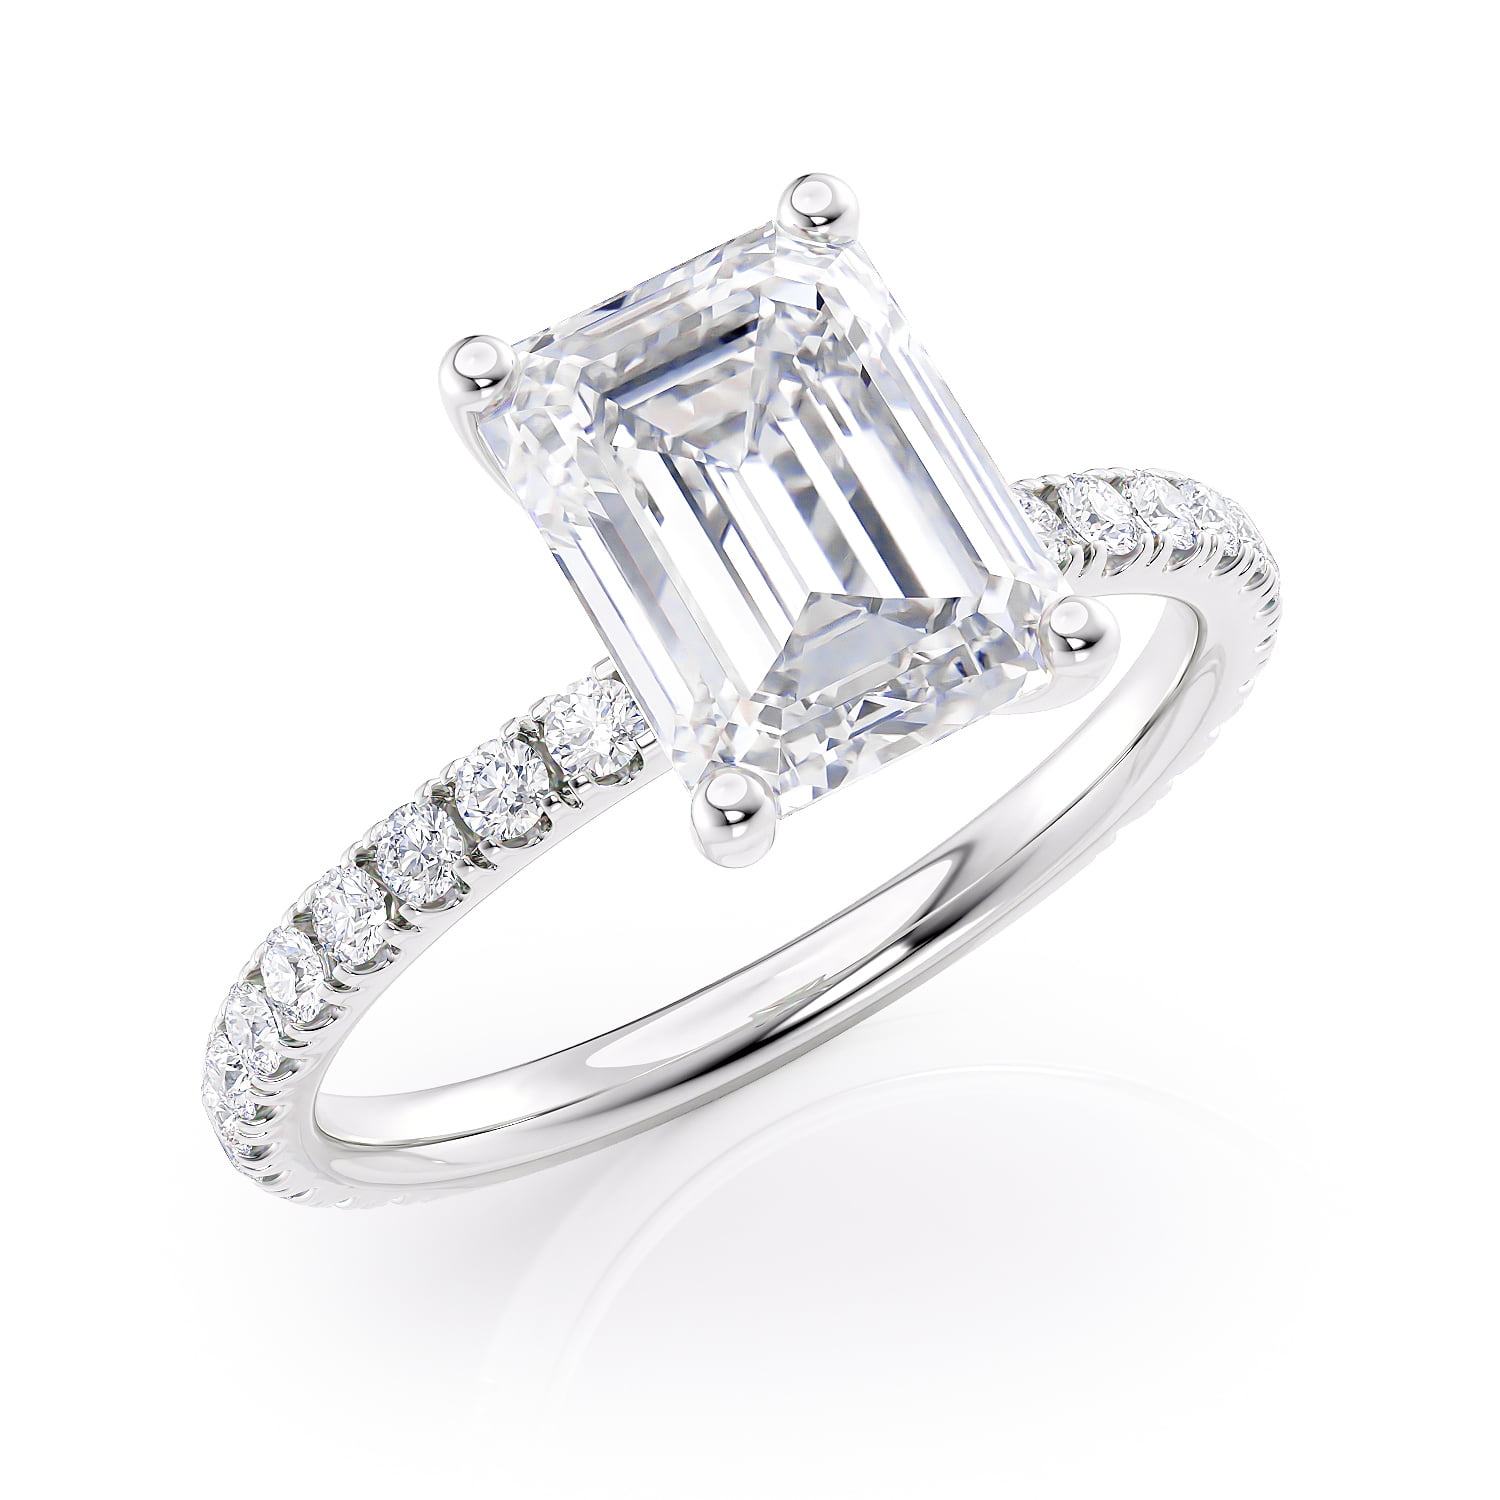 Valentine Solitaire Ring Engagement Proposal Ring White Round Cut Designer Moissanite Diamond Ring Bridesmaid Gift Handmade Jewelry